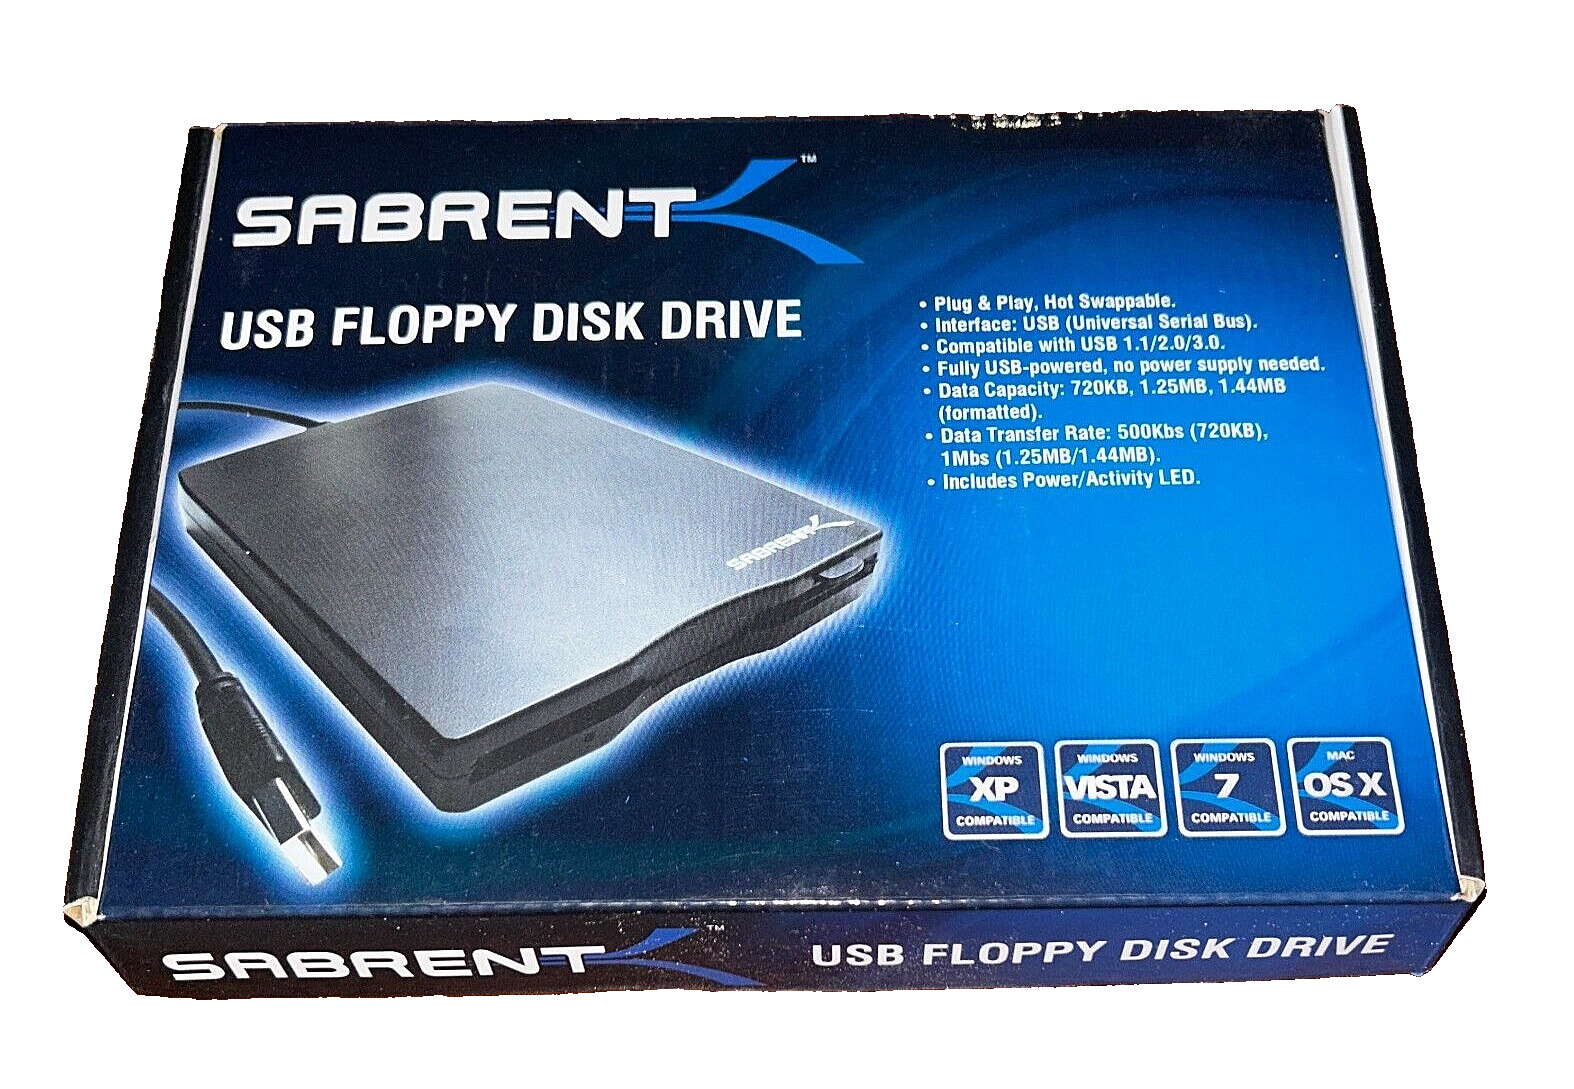 Sabrent External USB 1.44 MB Floppy Disk Drive Black Plug & Play SBT-UFDB